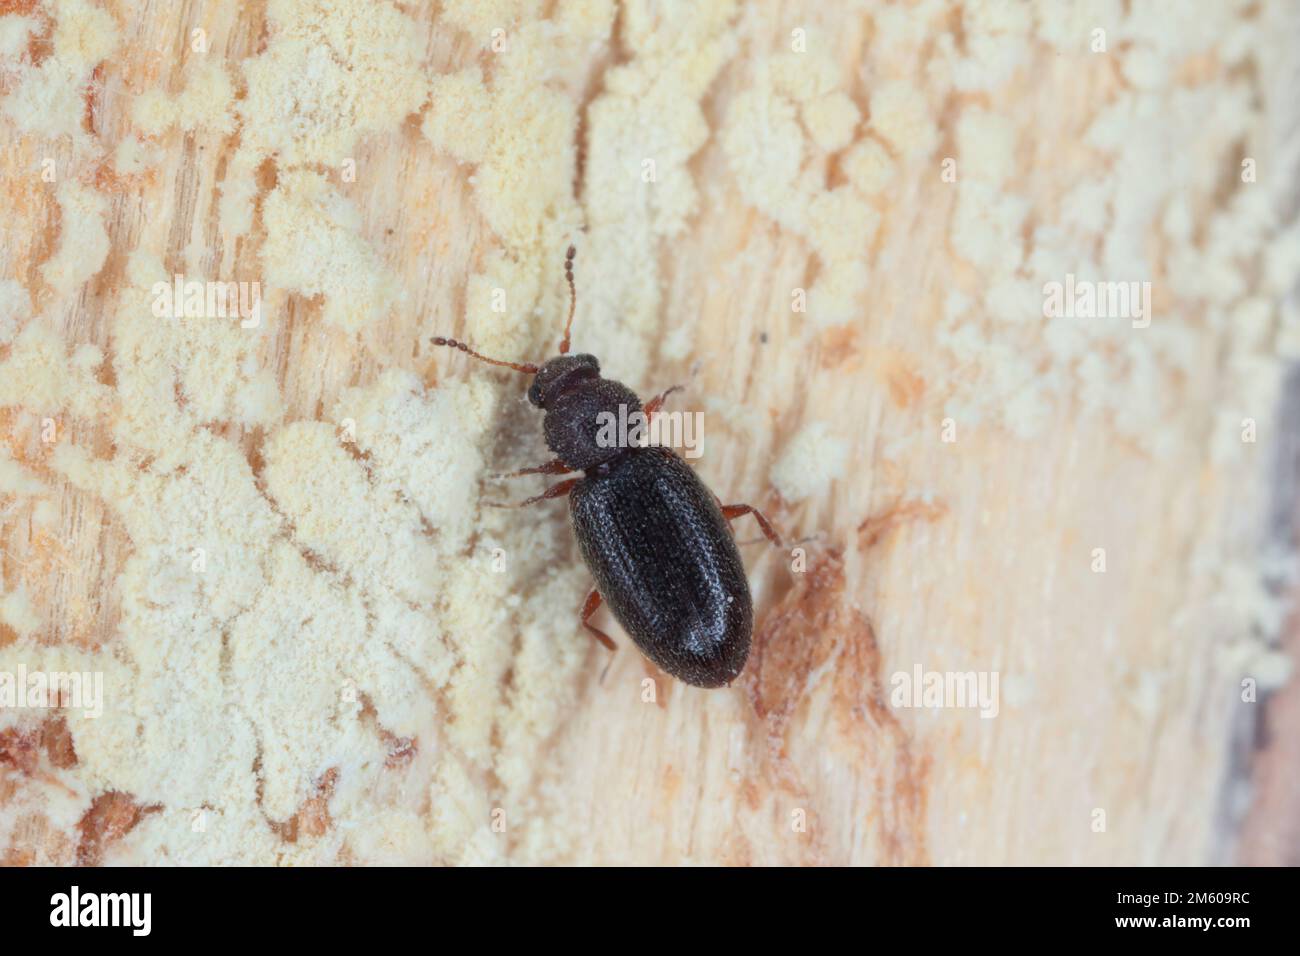 Tiny minute brown scavenger beetle Latridiidae, lathridiidae on wood. High magnification. Stock Photo